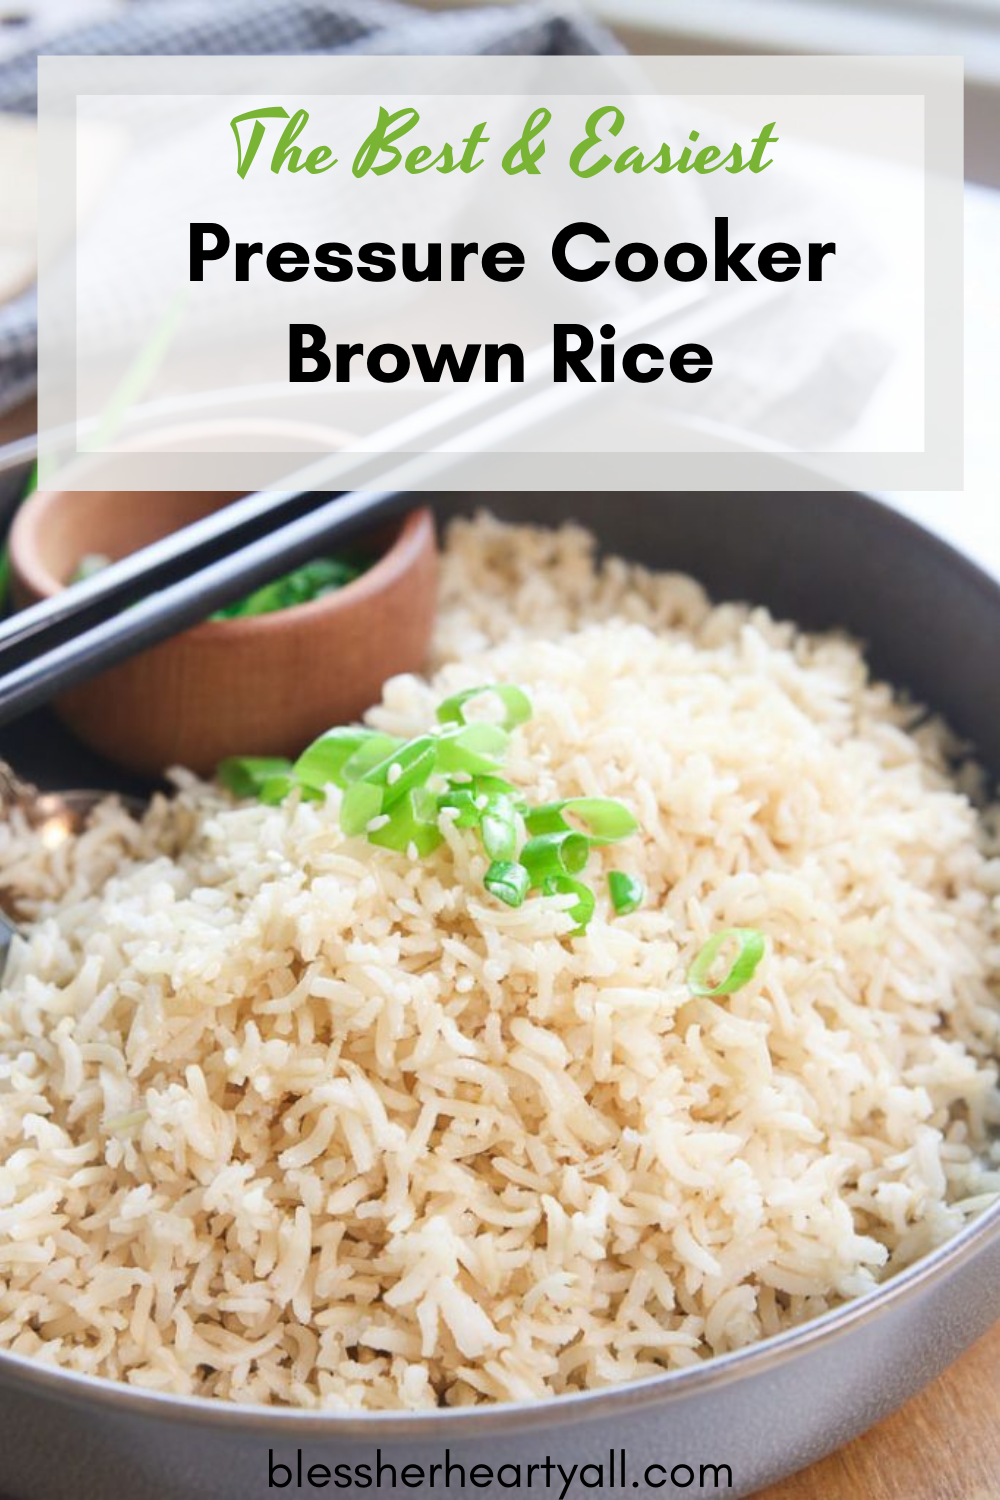 https://blessherheartyall.com/wp-content/uploads/2019/11/Pressure-Cooker-Brown-Rice-1.png